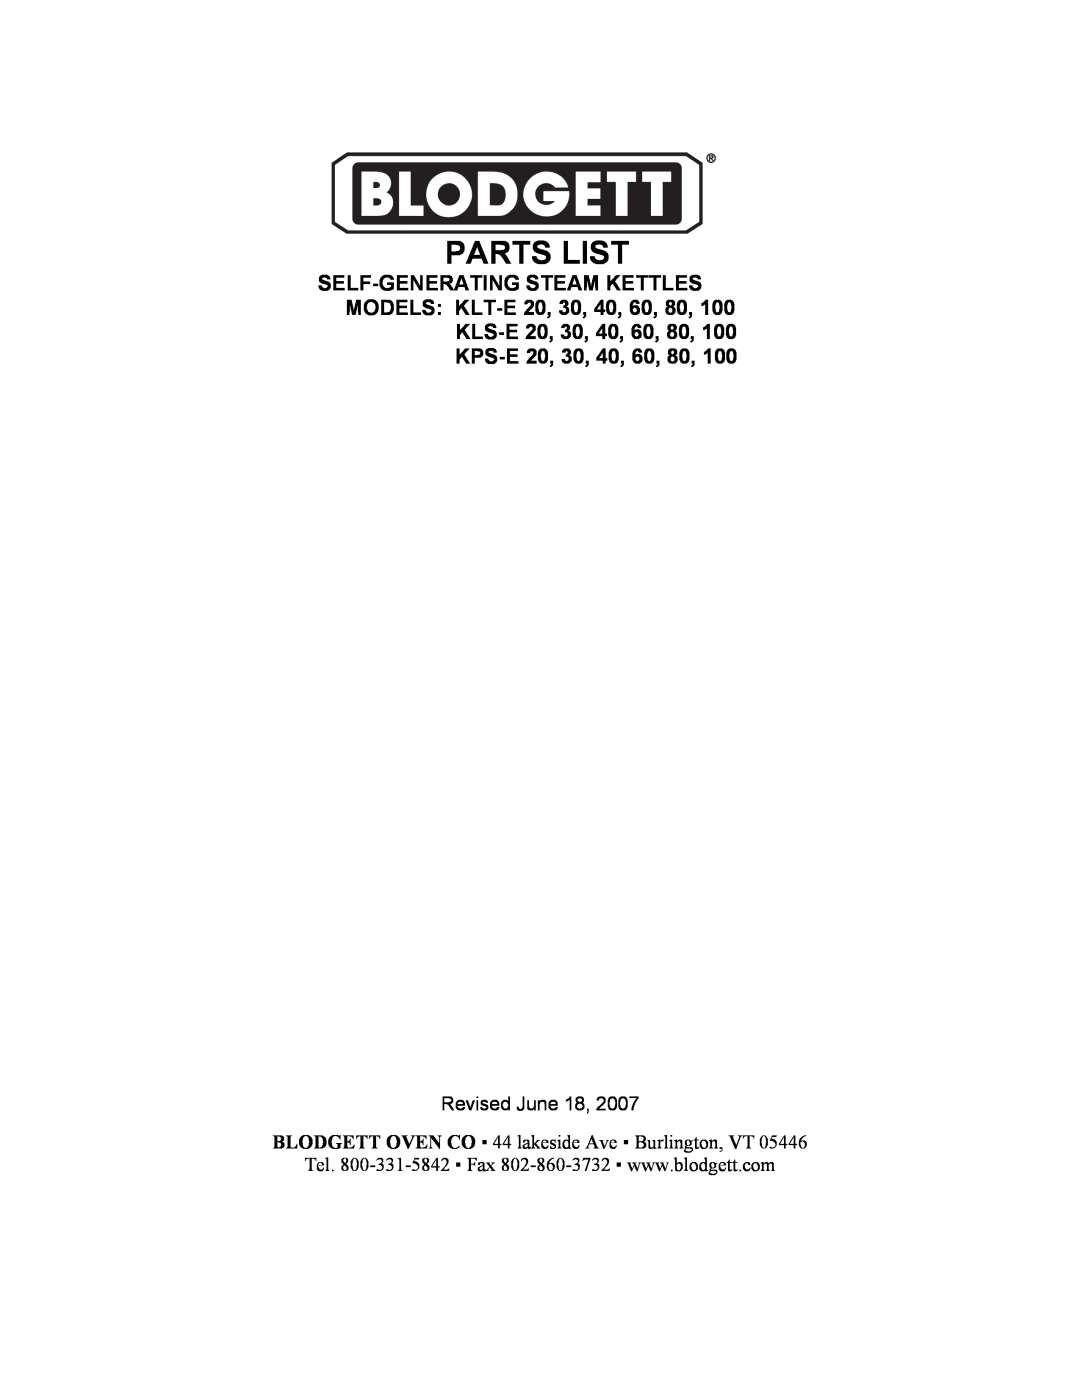 Blodgett KPS-E 60 manual Parts List, KLS-E20, 30, 40, 60, 80, KPS-E20, BLODGETT OVEN CO 44 lakeside Ave Burlington, VT 